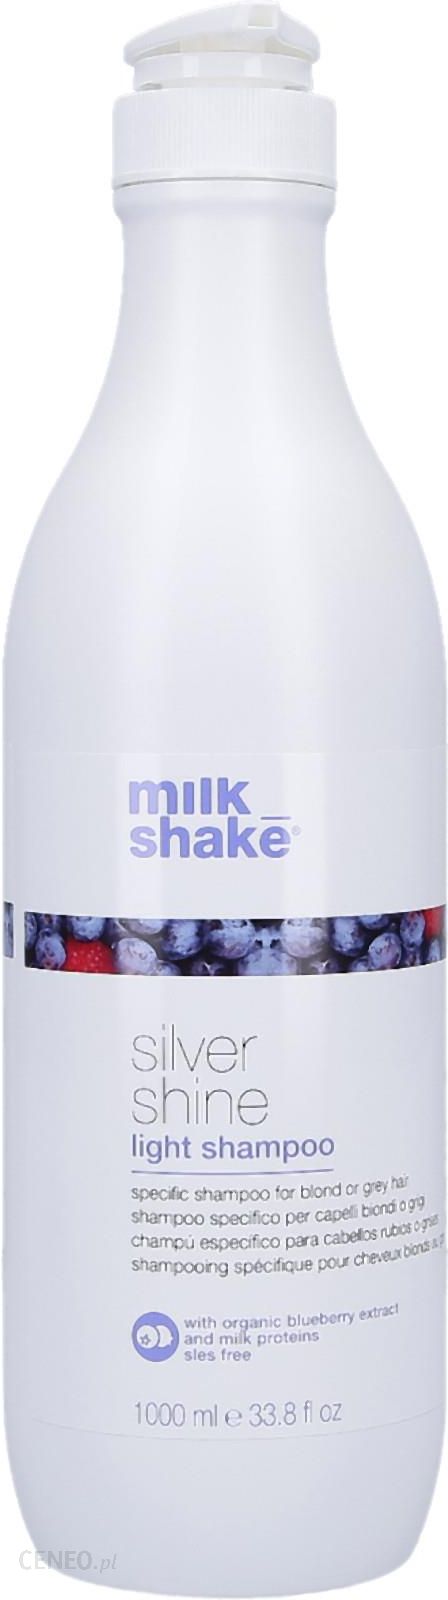 milk shake silver shine szampon 1000ml